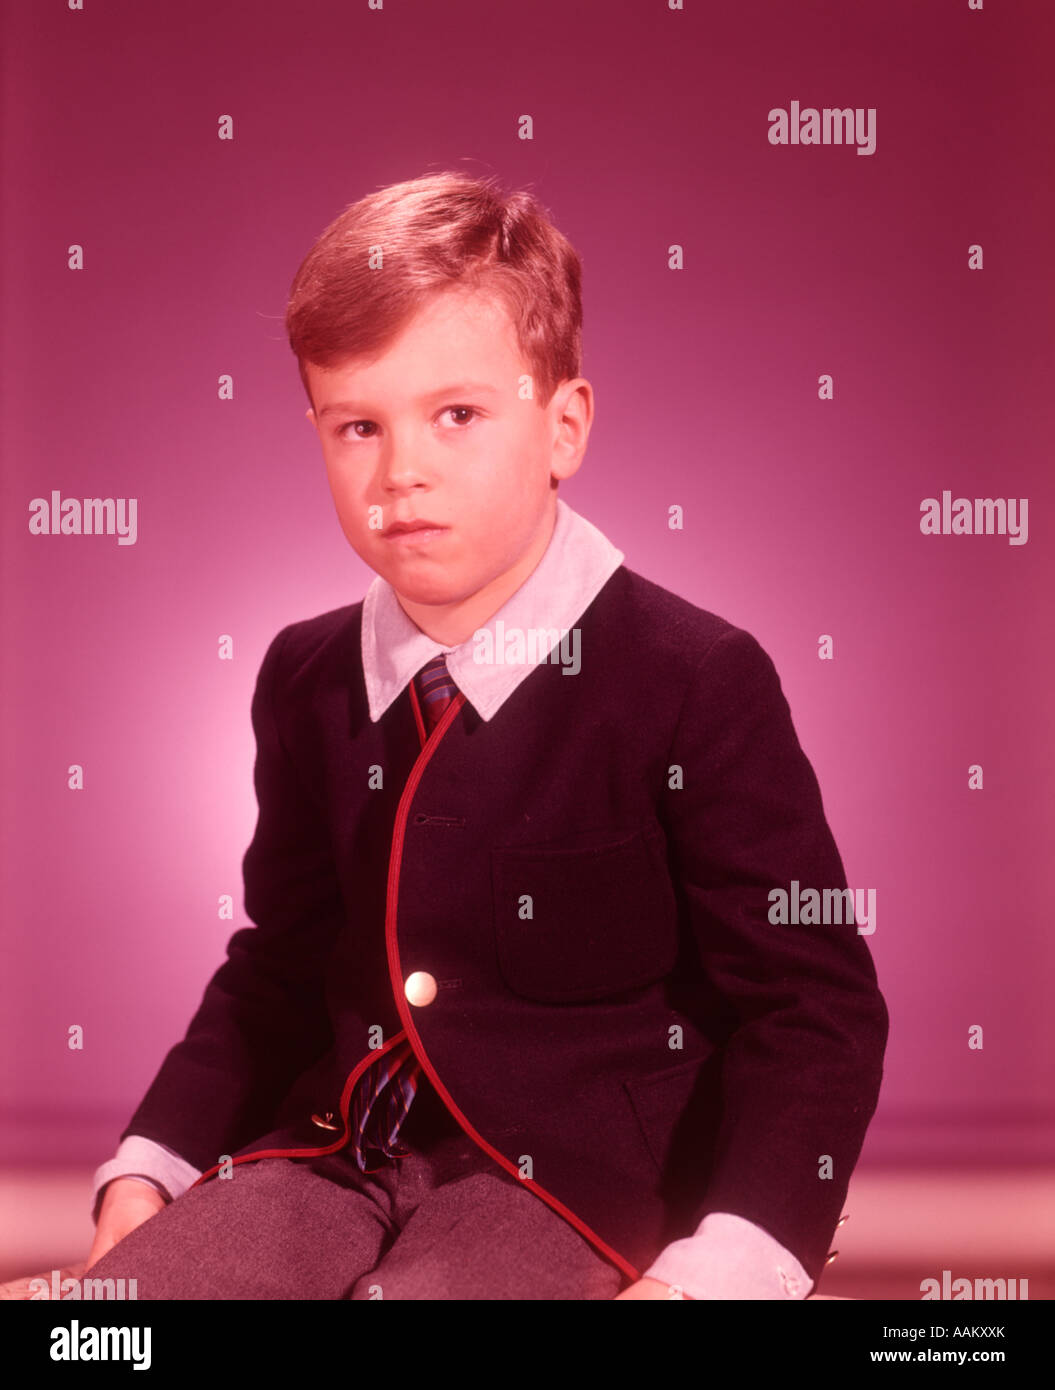 1960s STUDIO PORTRAIT LITTLE BOY SERIOUS EXPRESSION Stock Photo